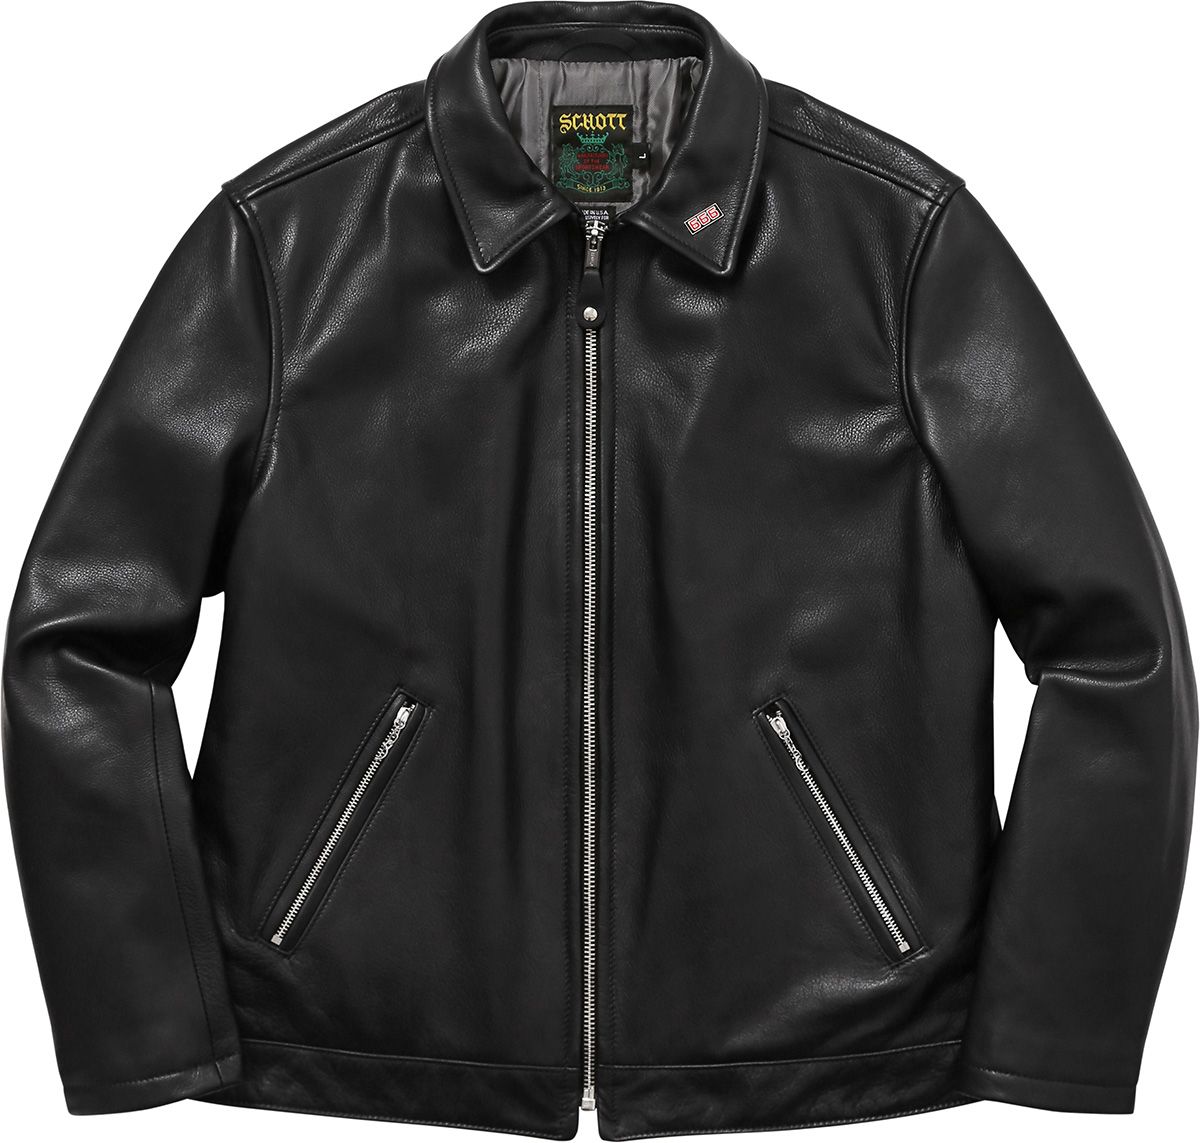 Supreme®/Schott® Leather Work Jacket - Spring/Summer 2017 Preview 